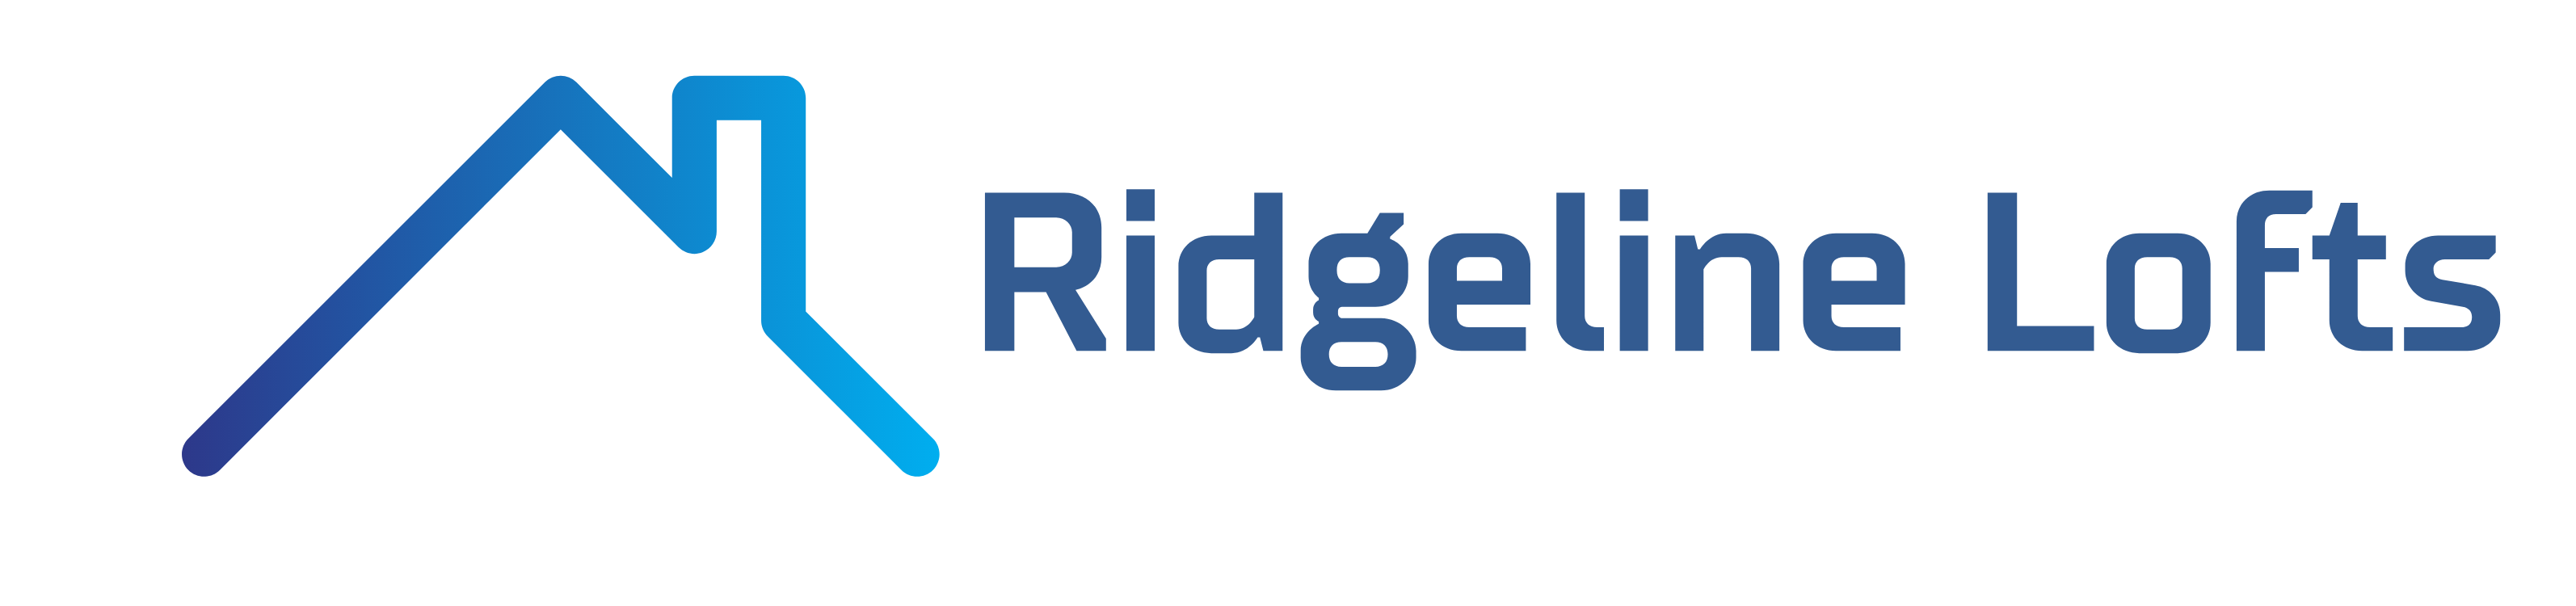 Ridgeline Lofts Logo